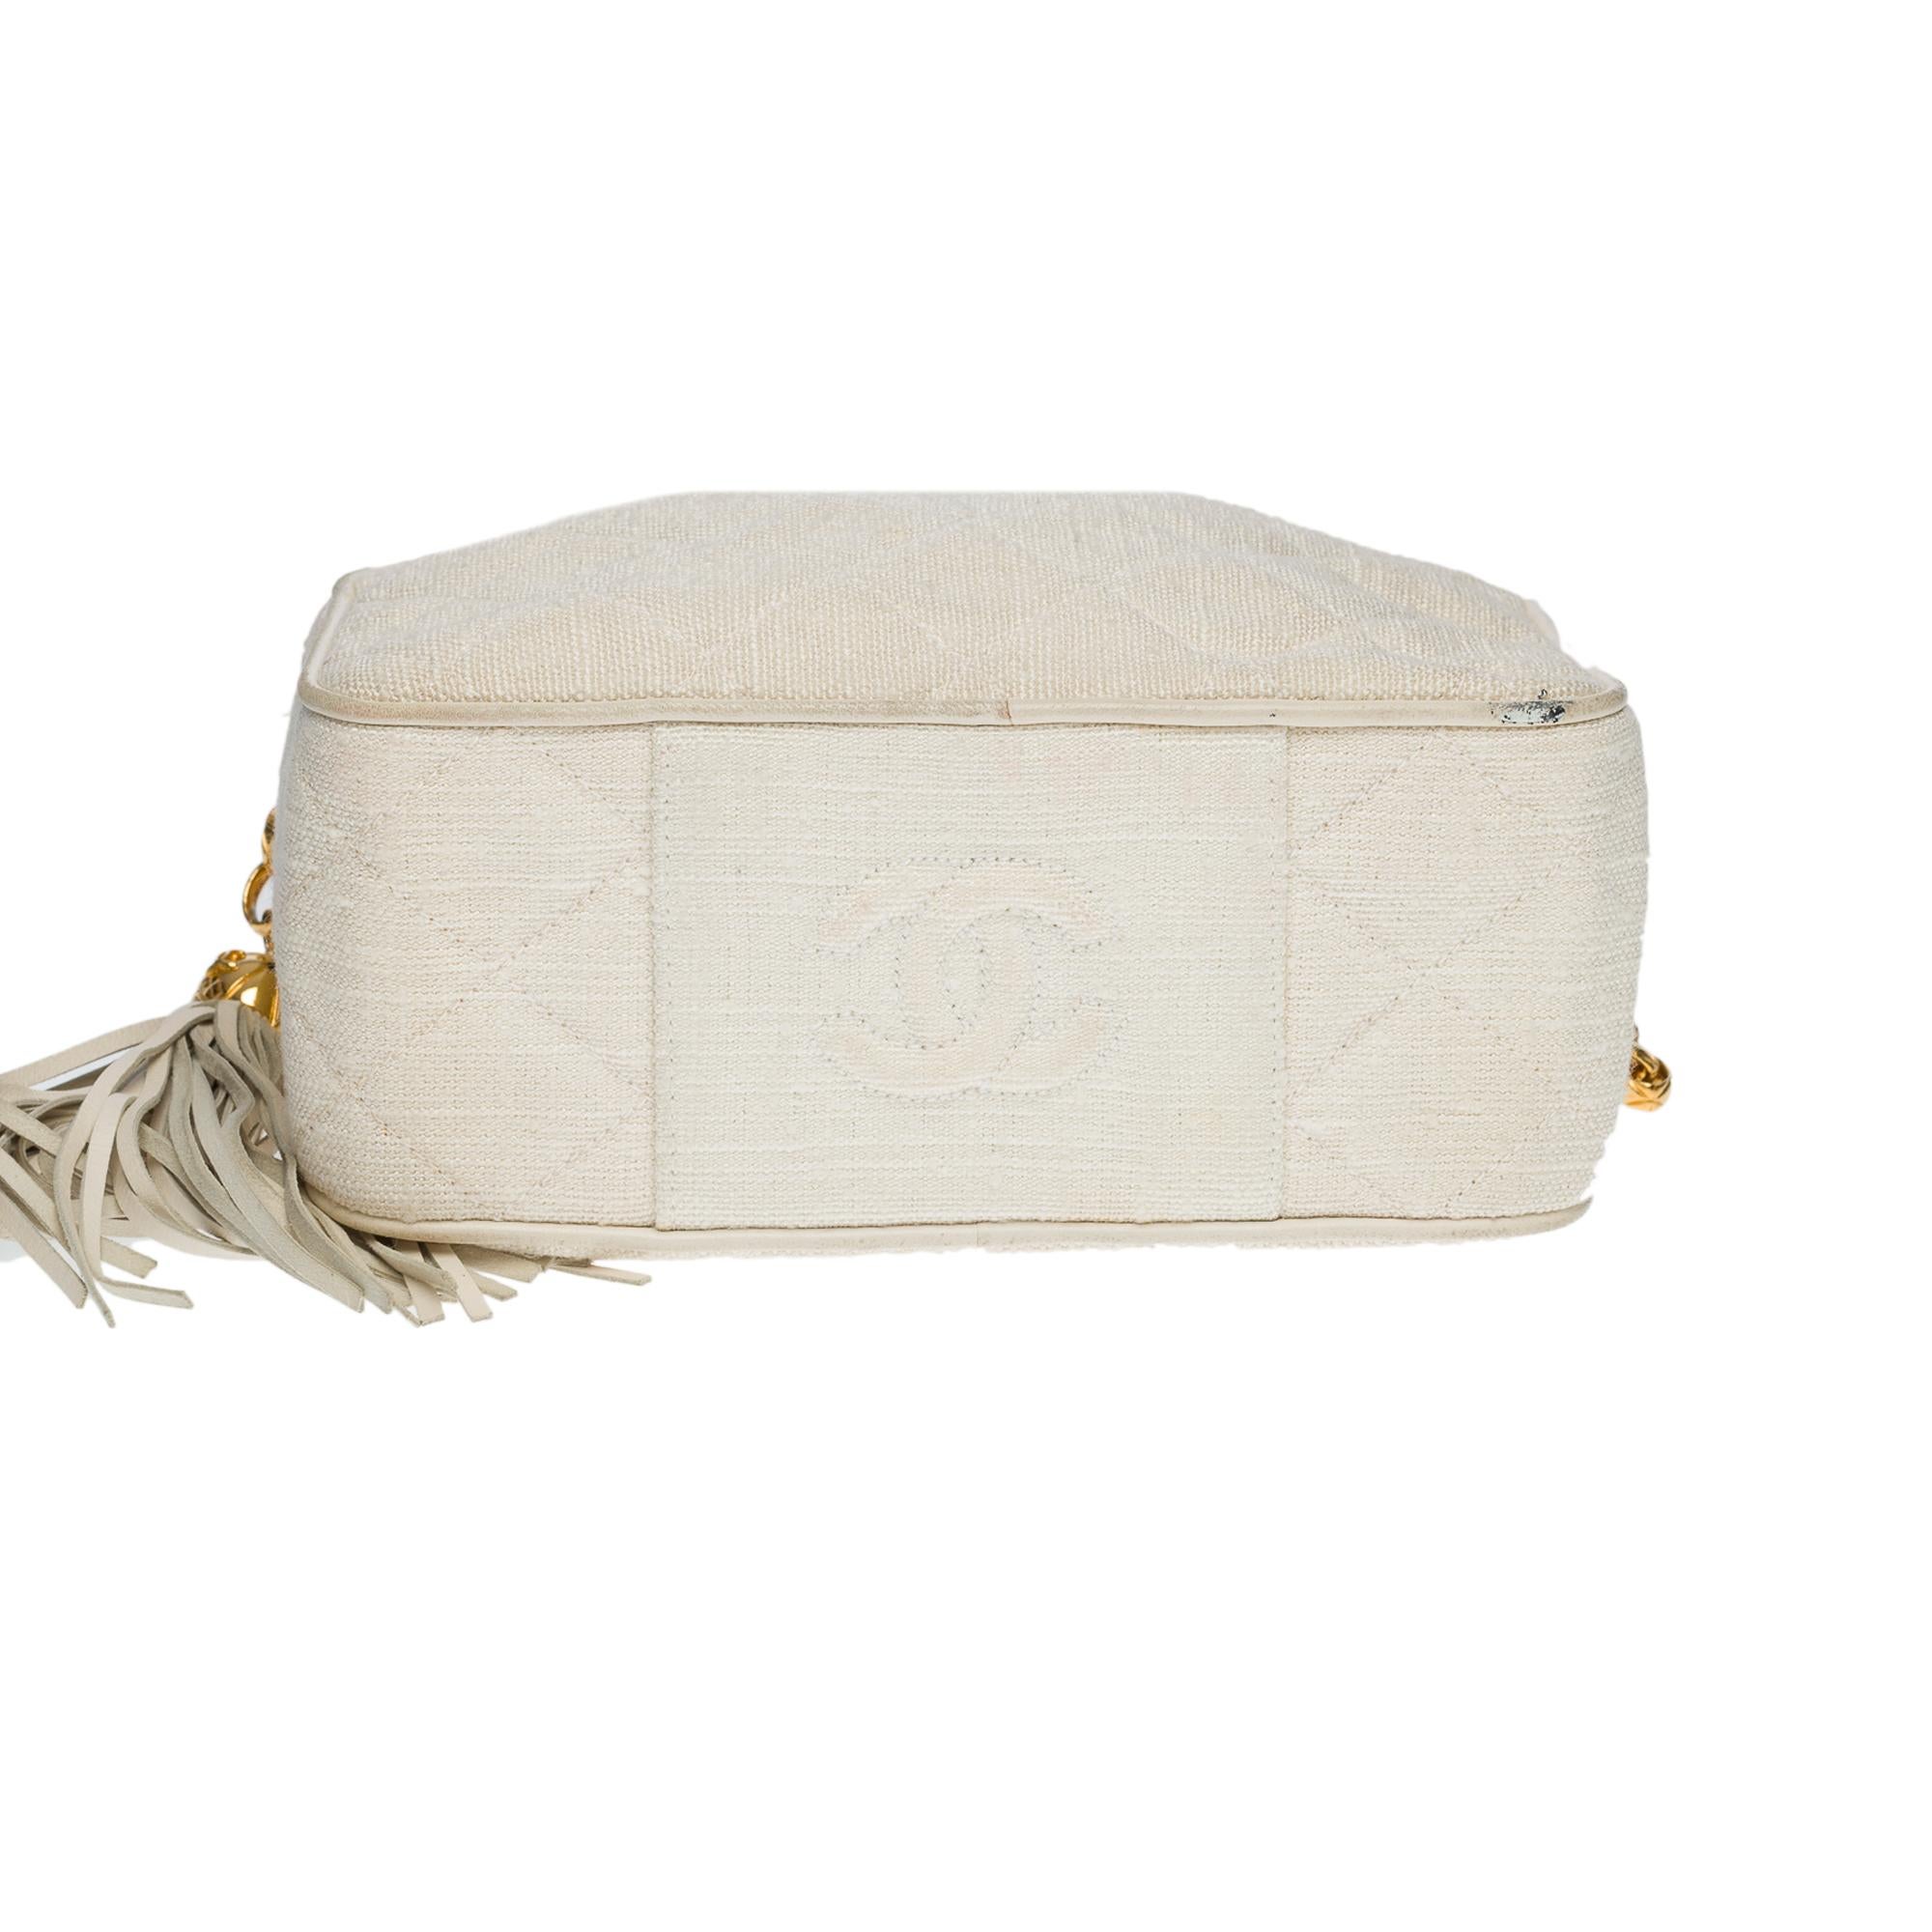 Rare Chanel Mini Camera shoulder bag in ecru quilted linen, GHW 1